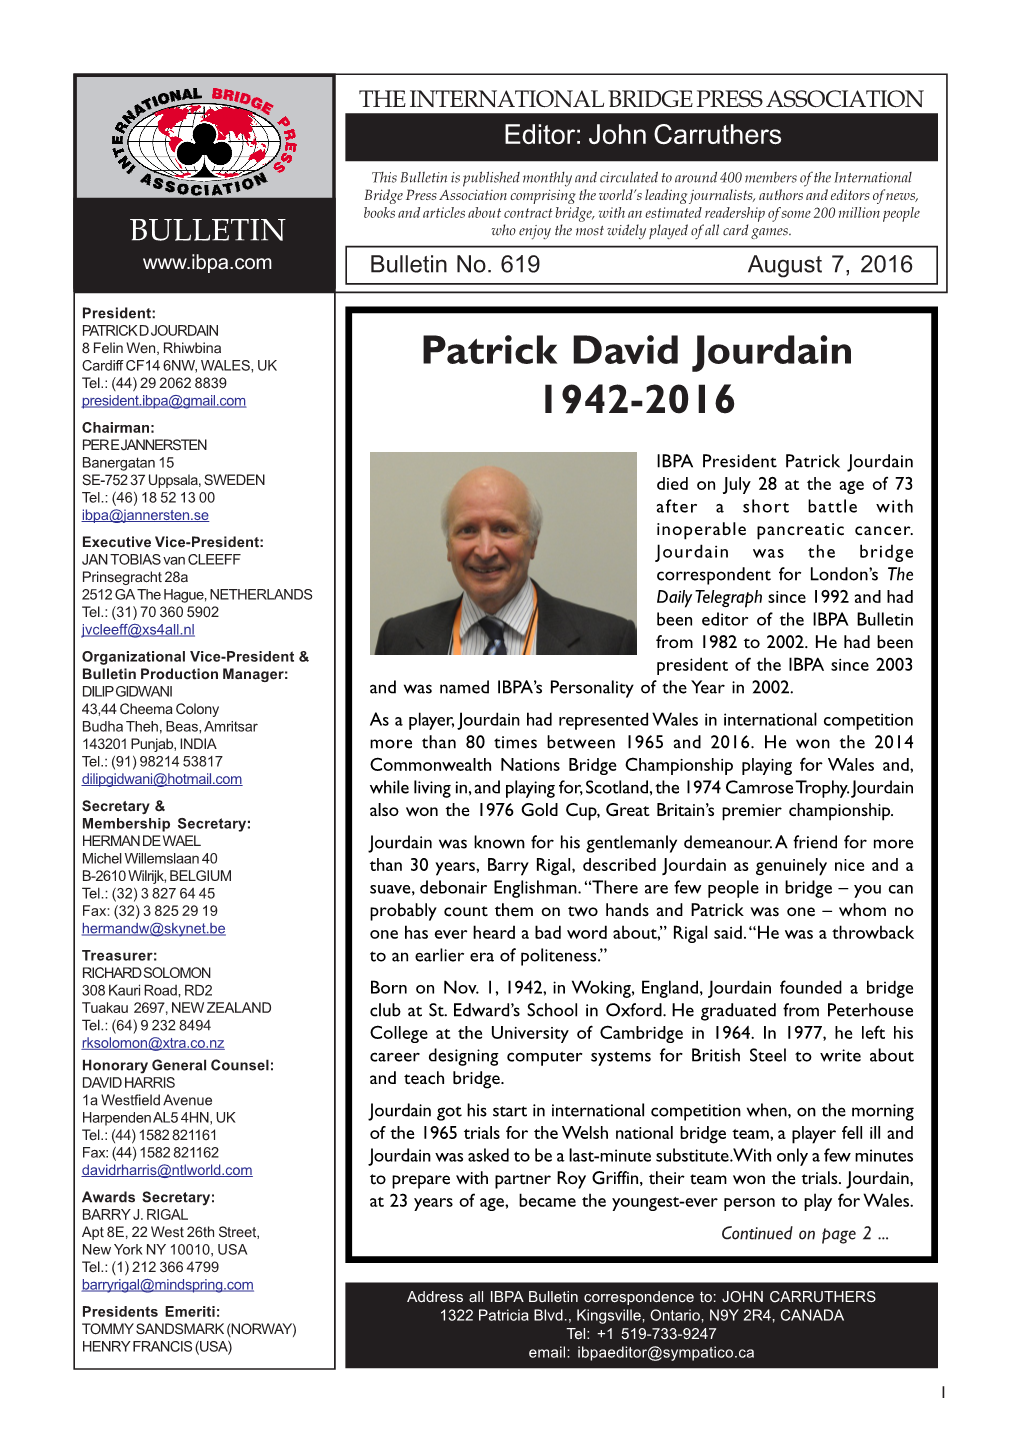 Patrick David Jourdain 1942-2016